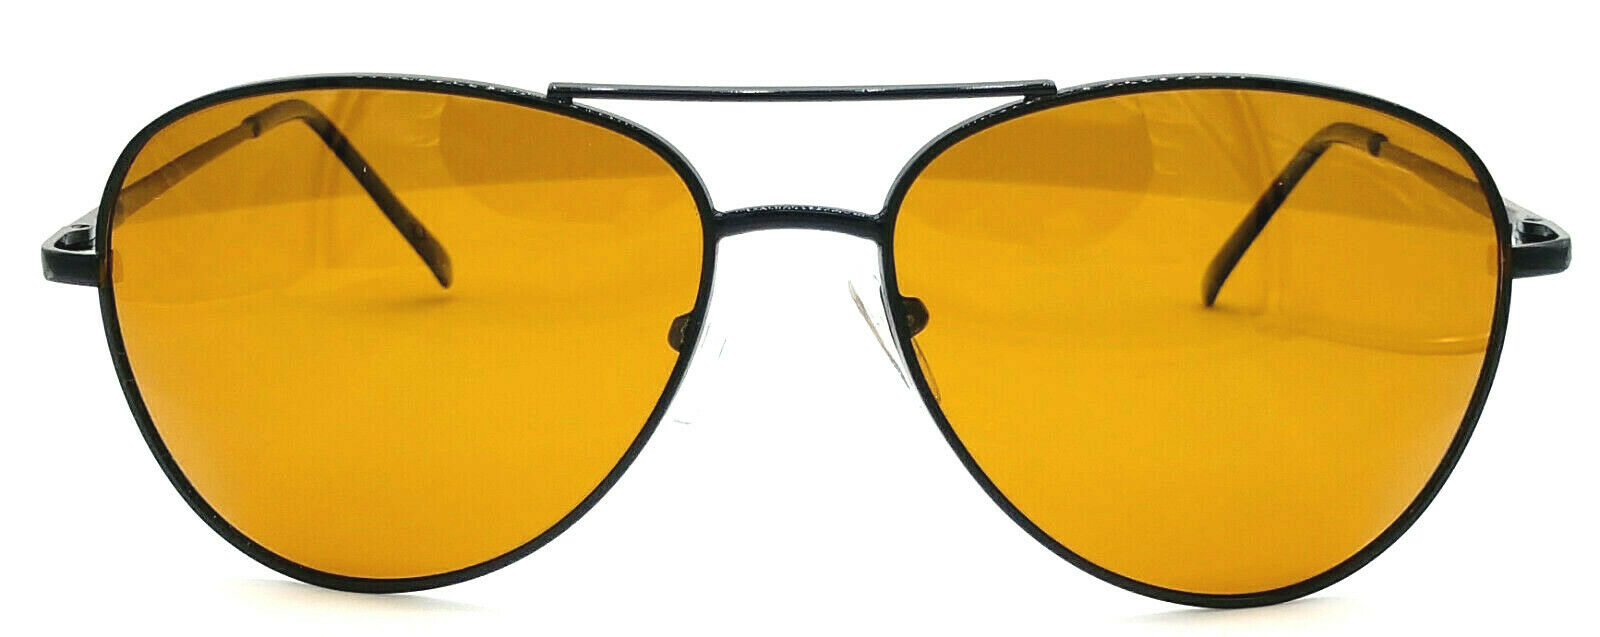 Envision Eyewear Fly-def High-Def Polarized Fishing Sunglasses Gold Lens Metal Teardrop Aviator - Gunmetal, adult Unisex, Size: One size, Gray